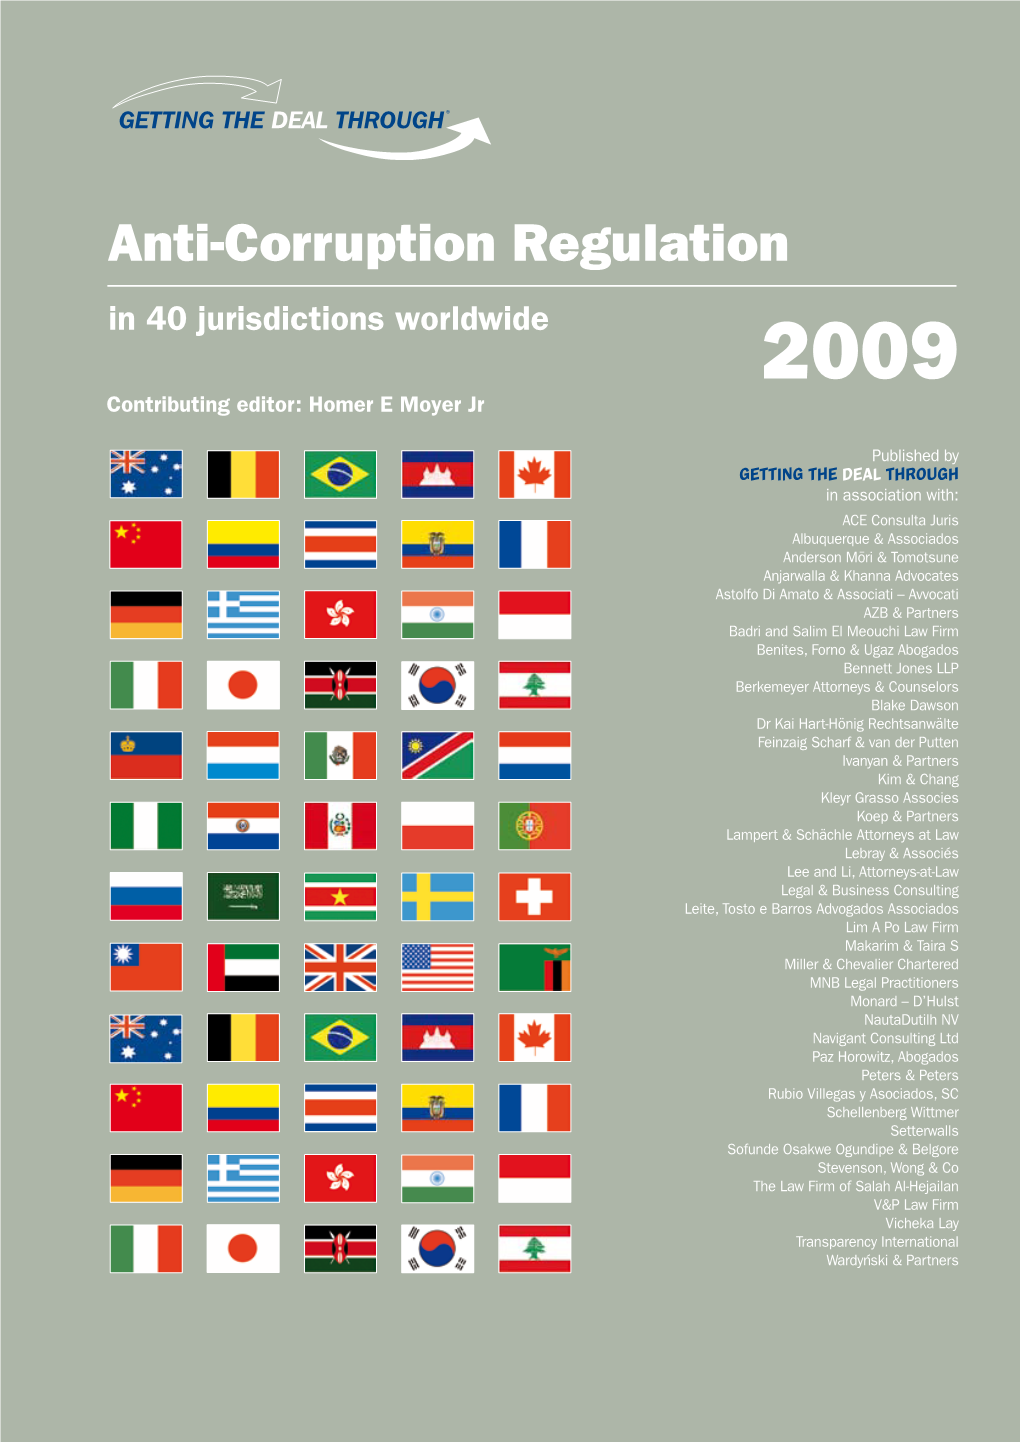 Anti-Corruption Regulation in 40 Jurisdictions Worldwide 2009 Contributing Editor: Homer E Moyer Jr